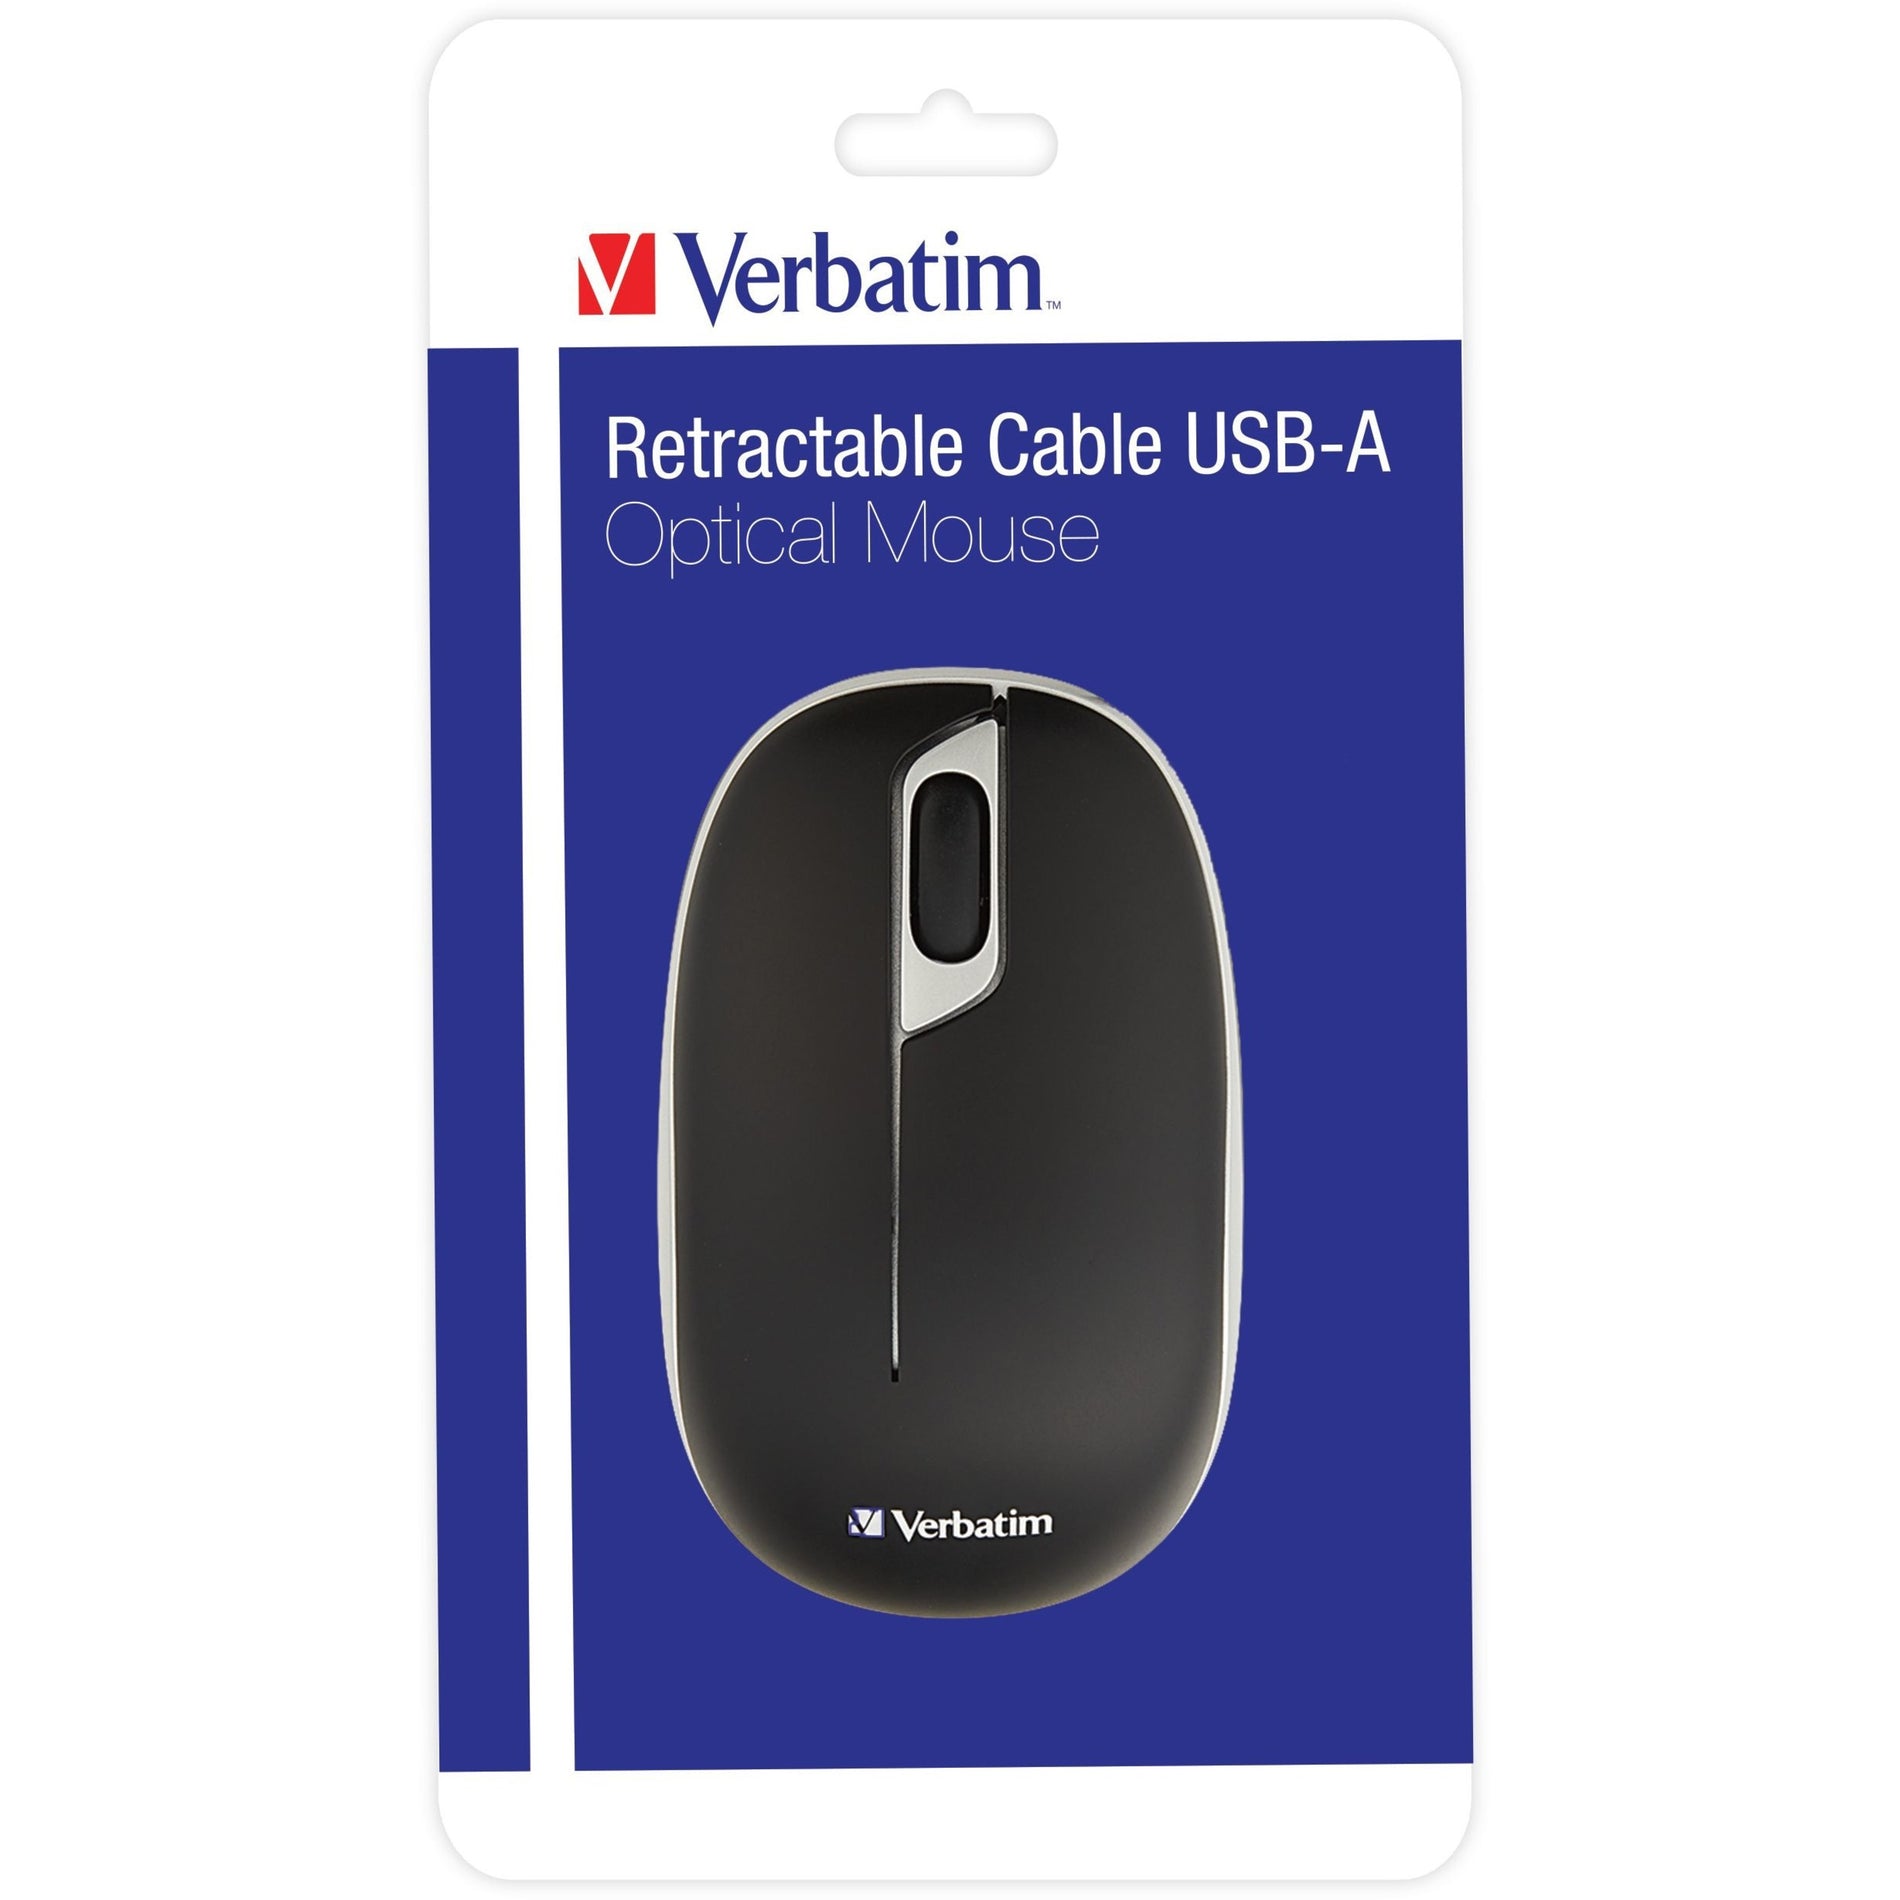 Verbatim 70751 Mouse, Retractable Cable USB-A Optical, Black